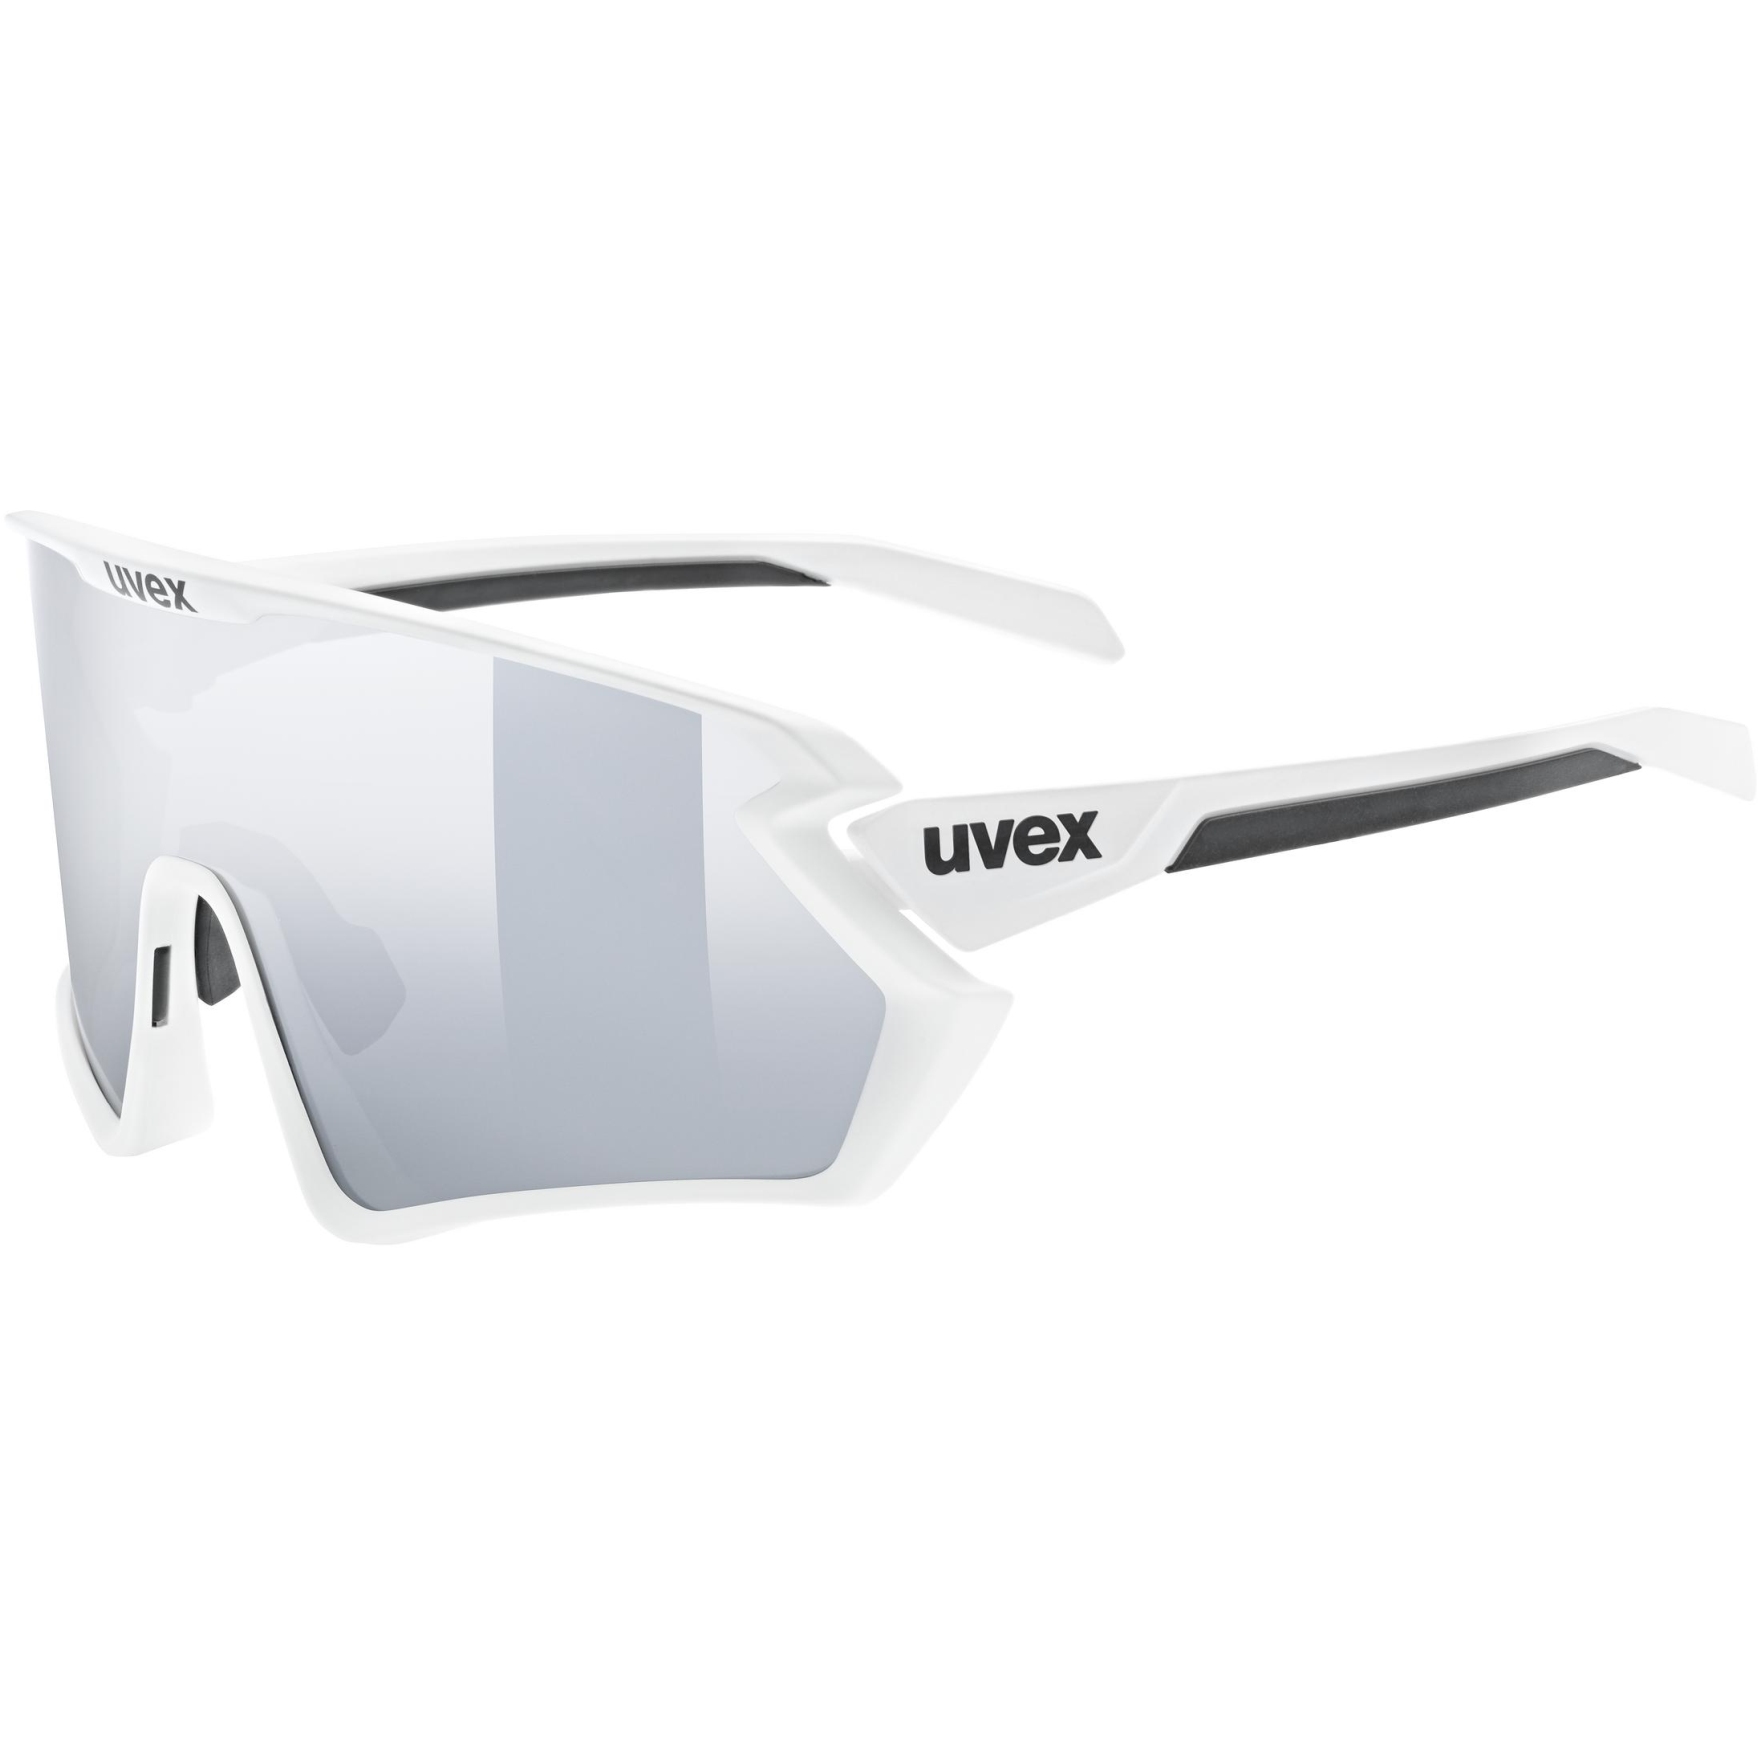 Productfoto van Uvex sportstyle 231 2.0 Set Bril - white-black matt/supravision mirror silver + clear